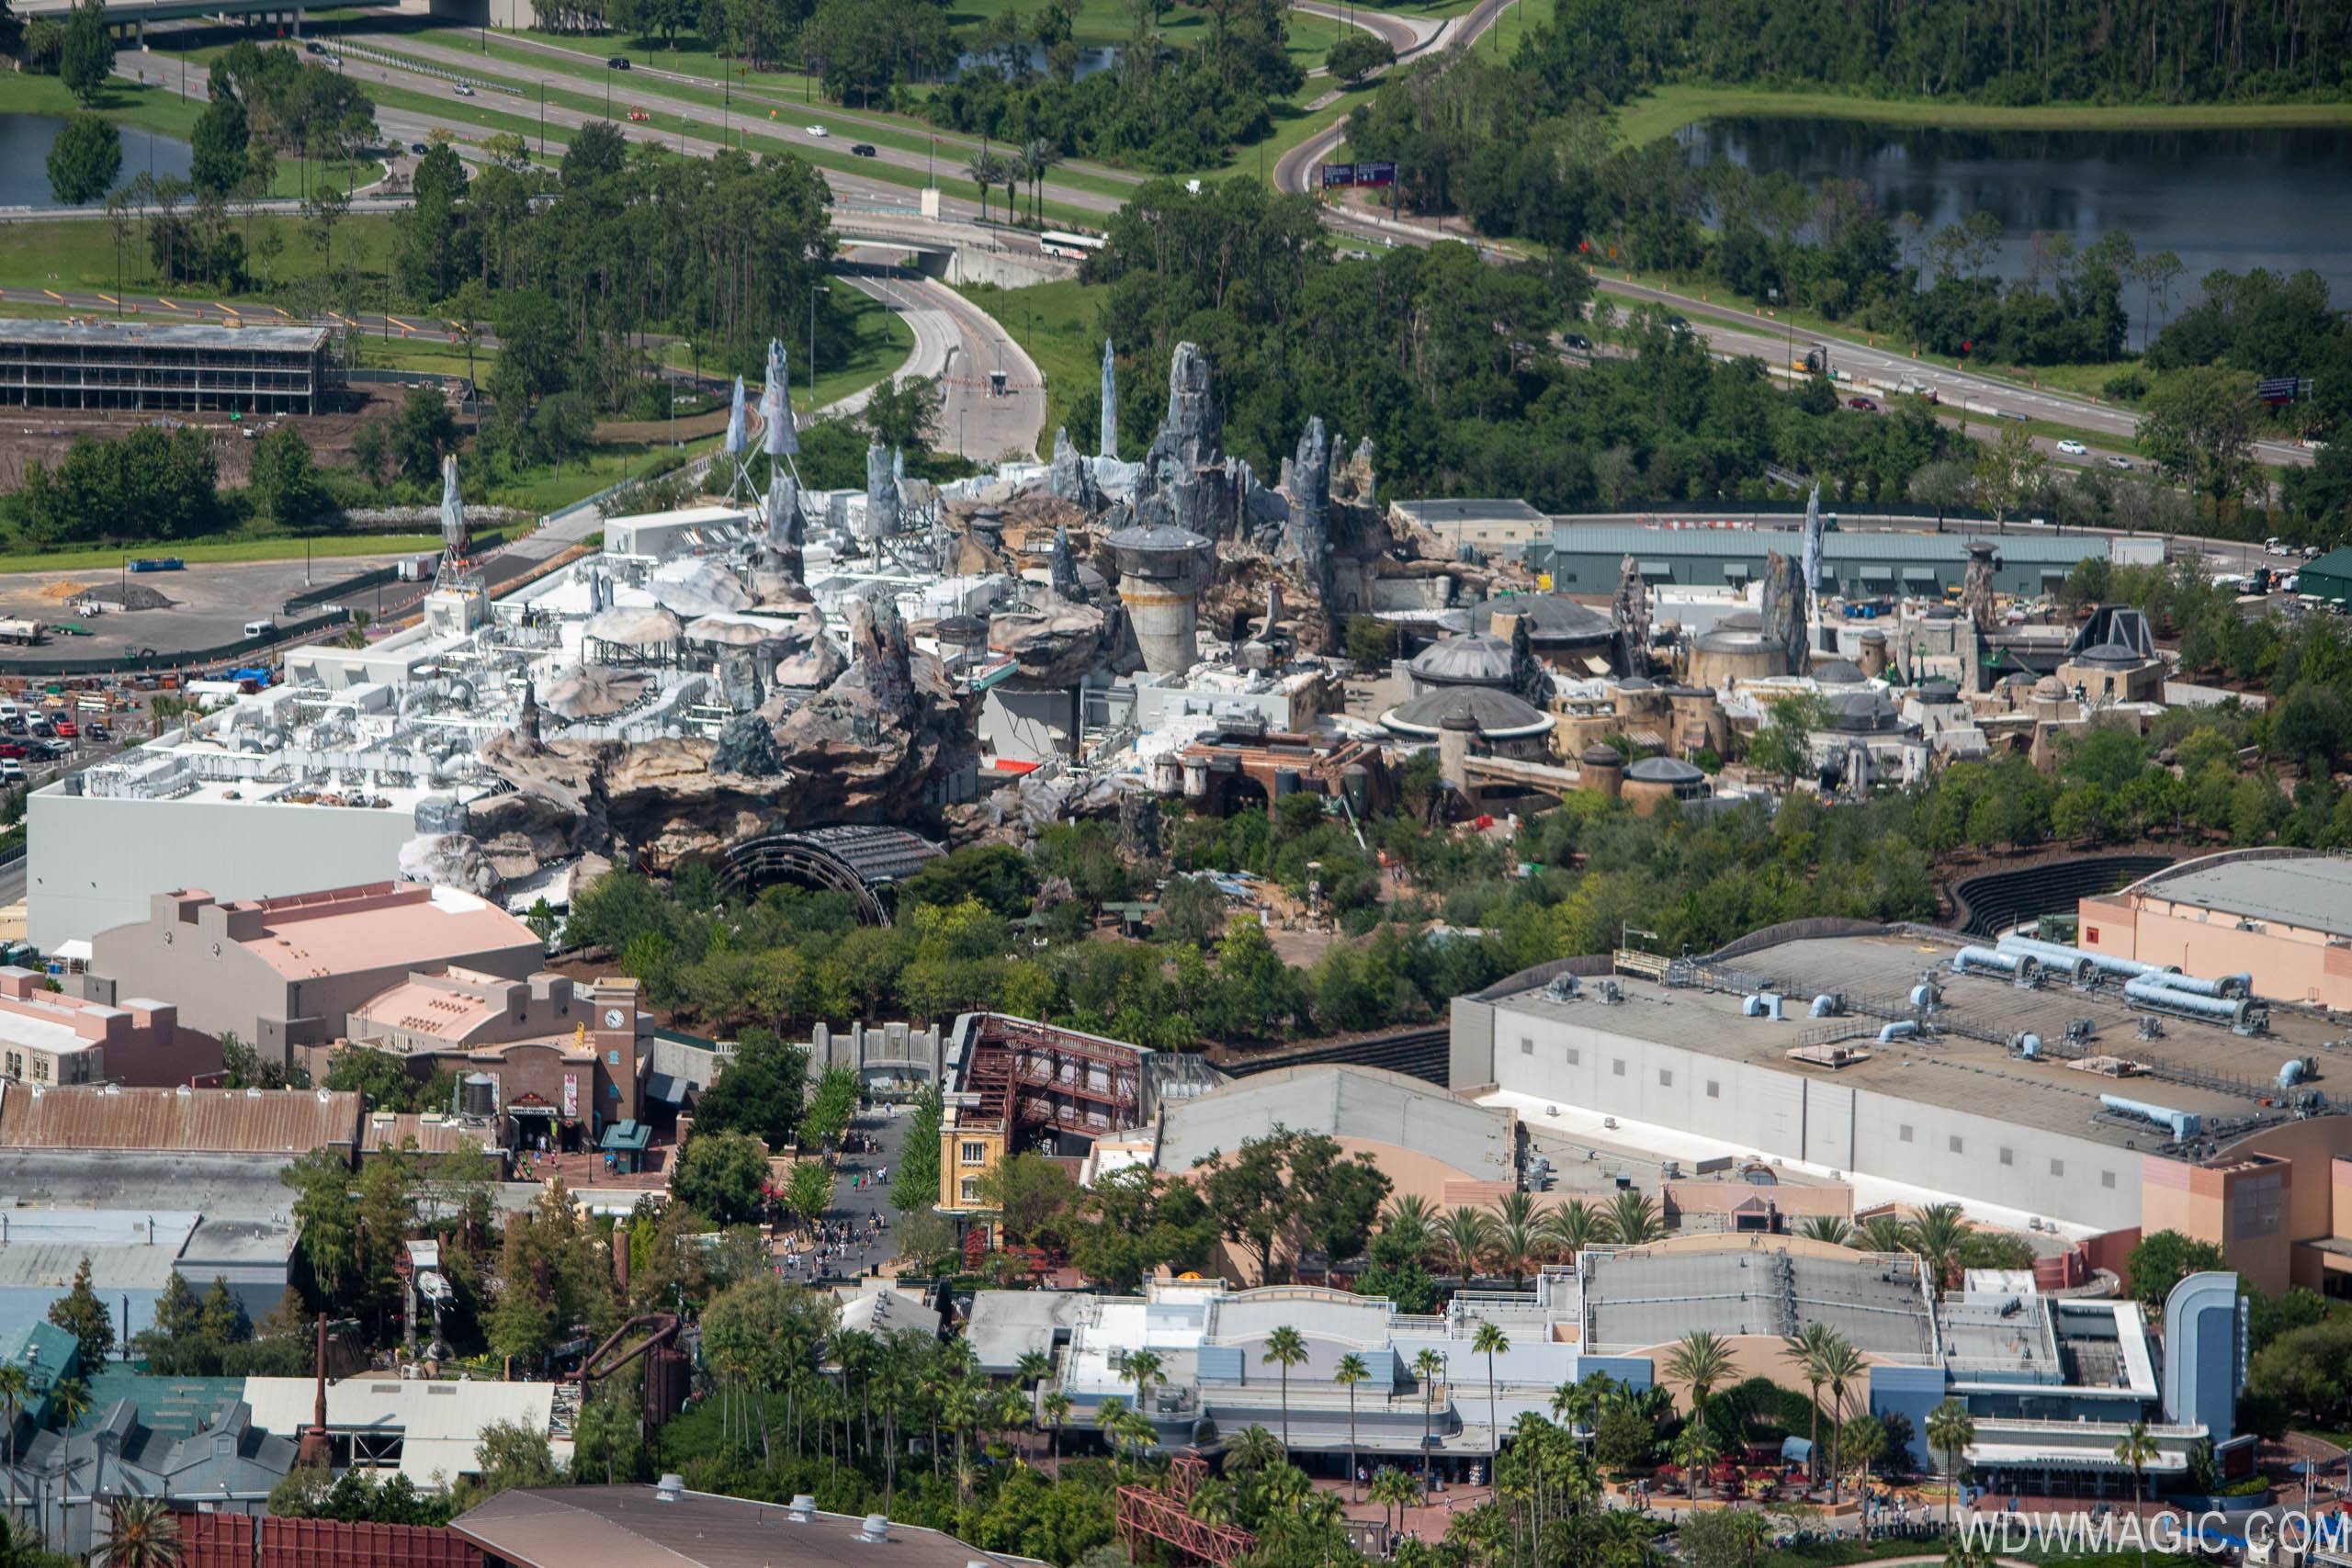 PHOTOS - Aerial tour of a near-complete Star Wars Galaxy's Edge at Walt Disney World